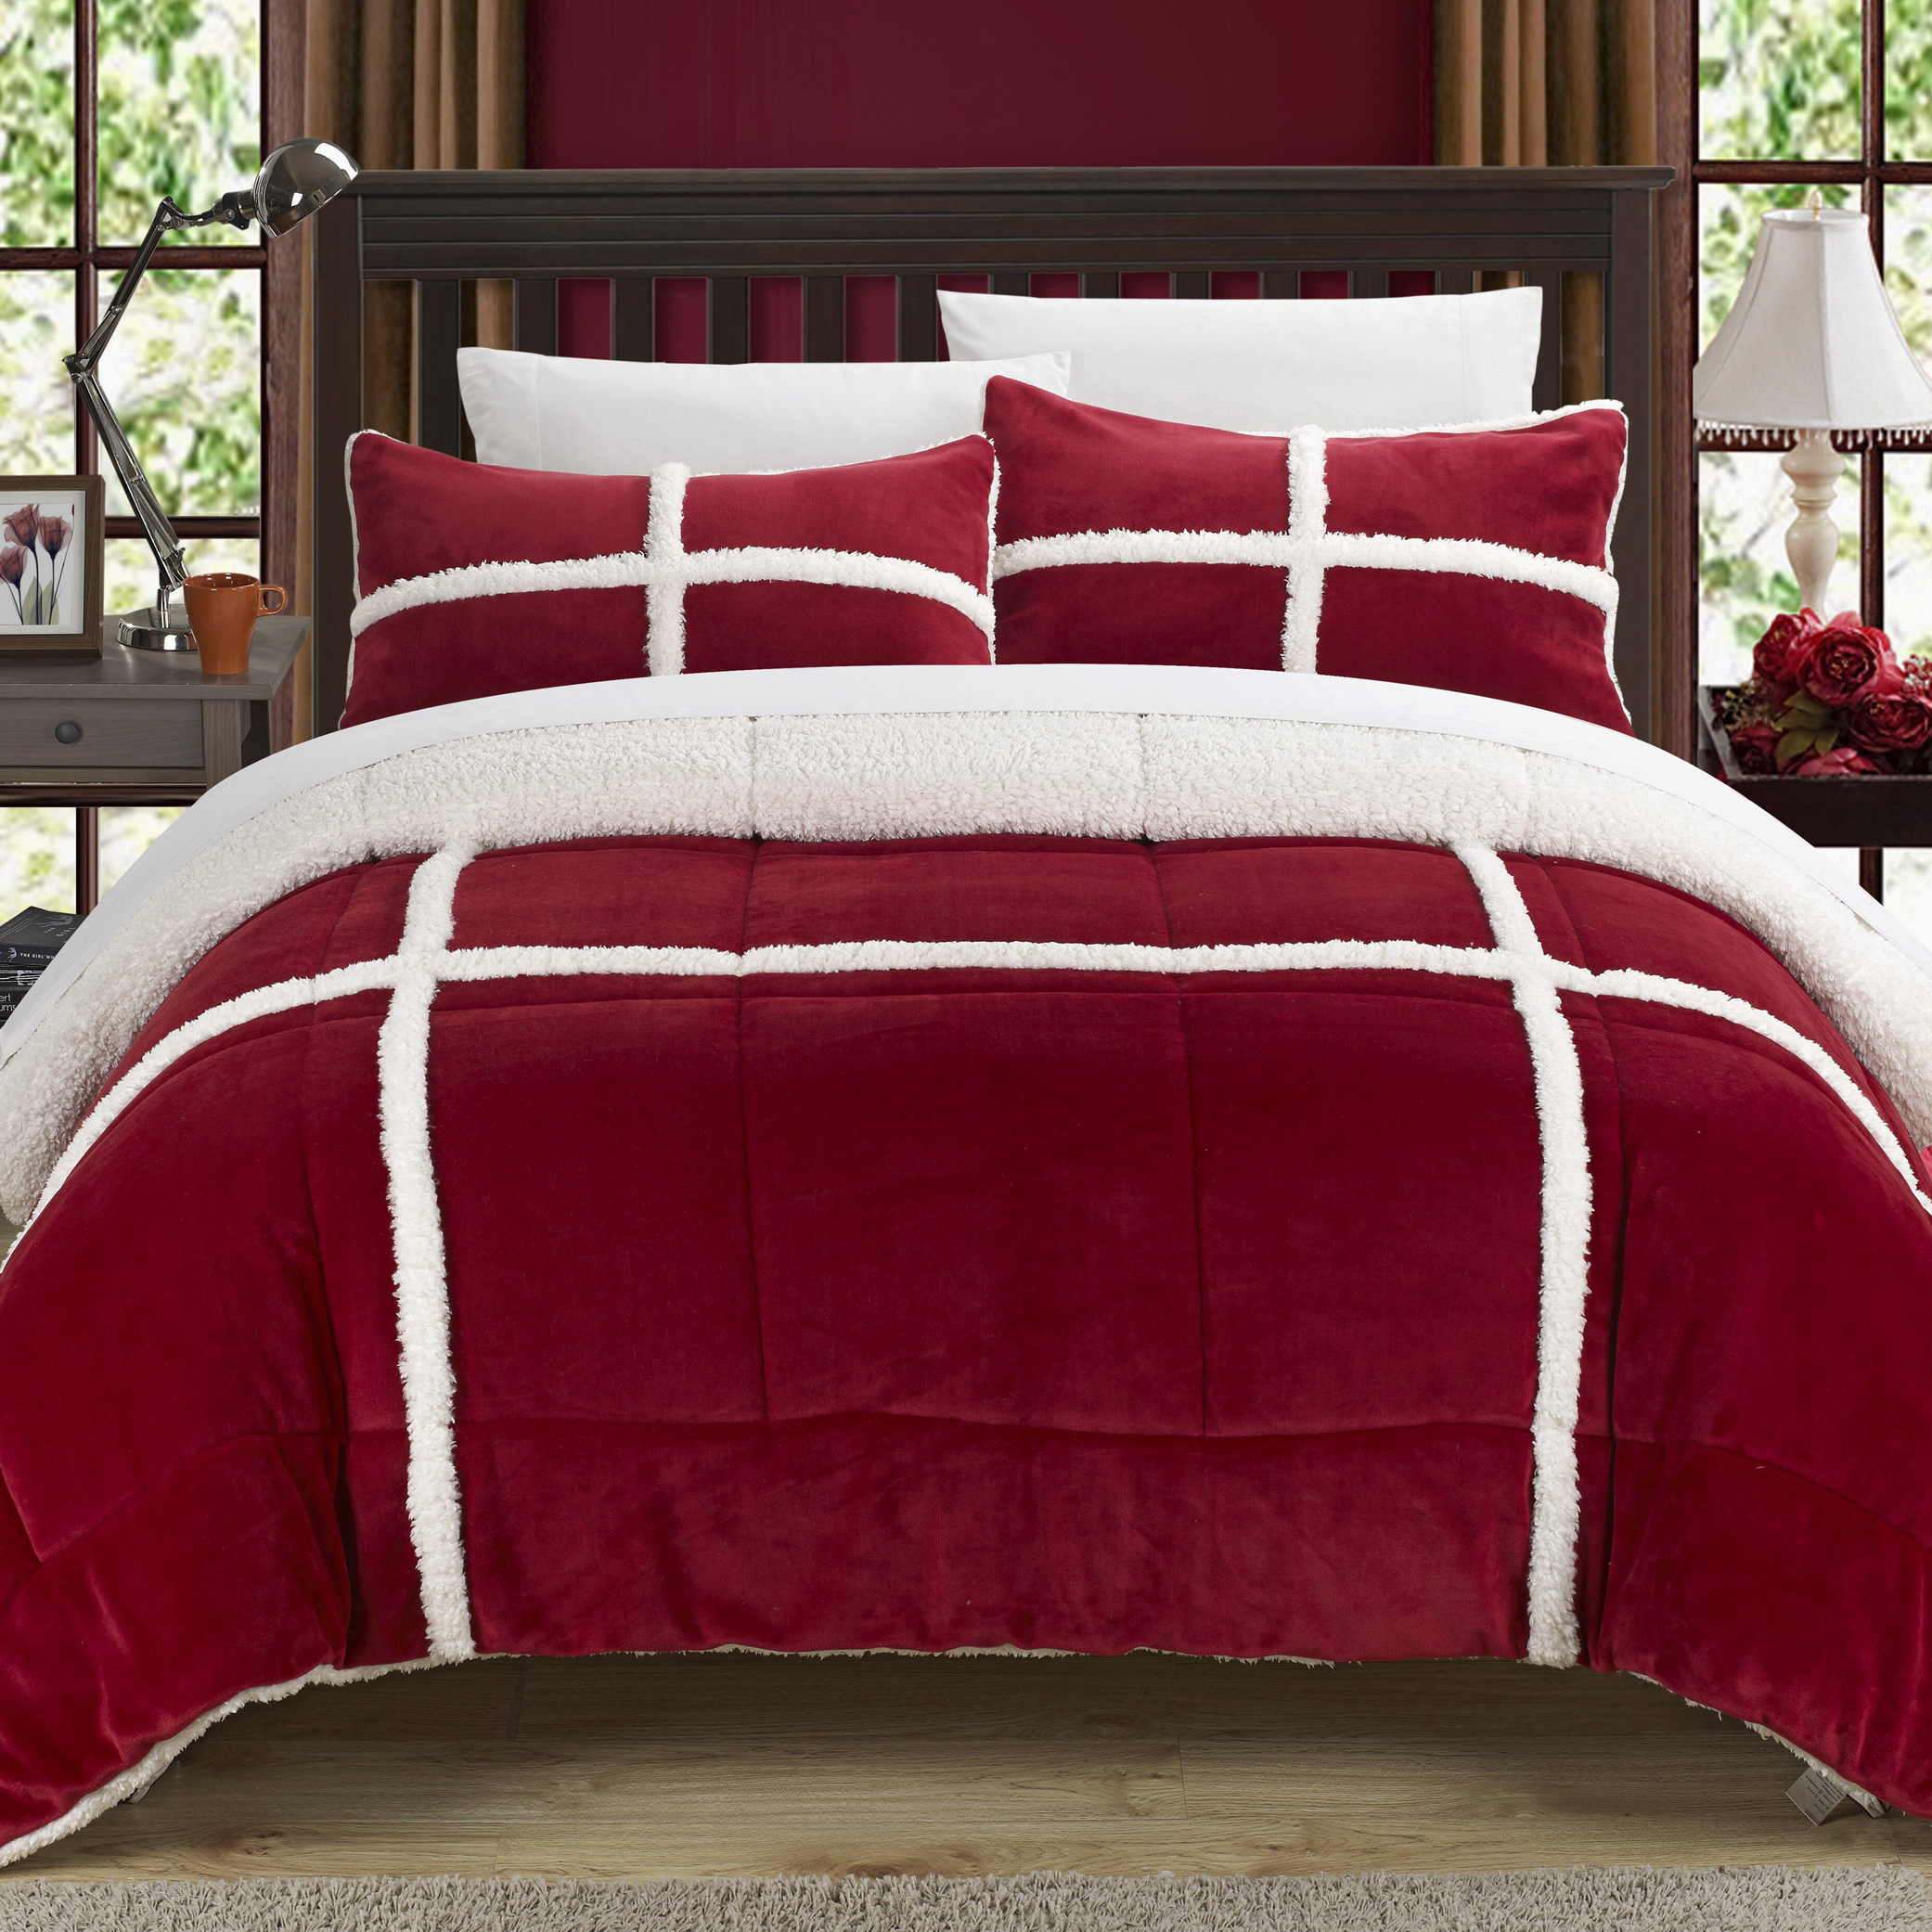 Chloe 3 Or 2 Piece Comforter Set Ultra Plush Micro Mink Sherpa Lined Bedding â Decorative Pillow Shams Included - Red, King - 3 Piece